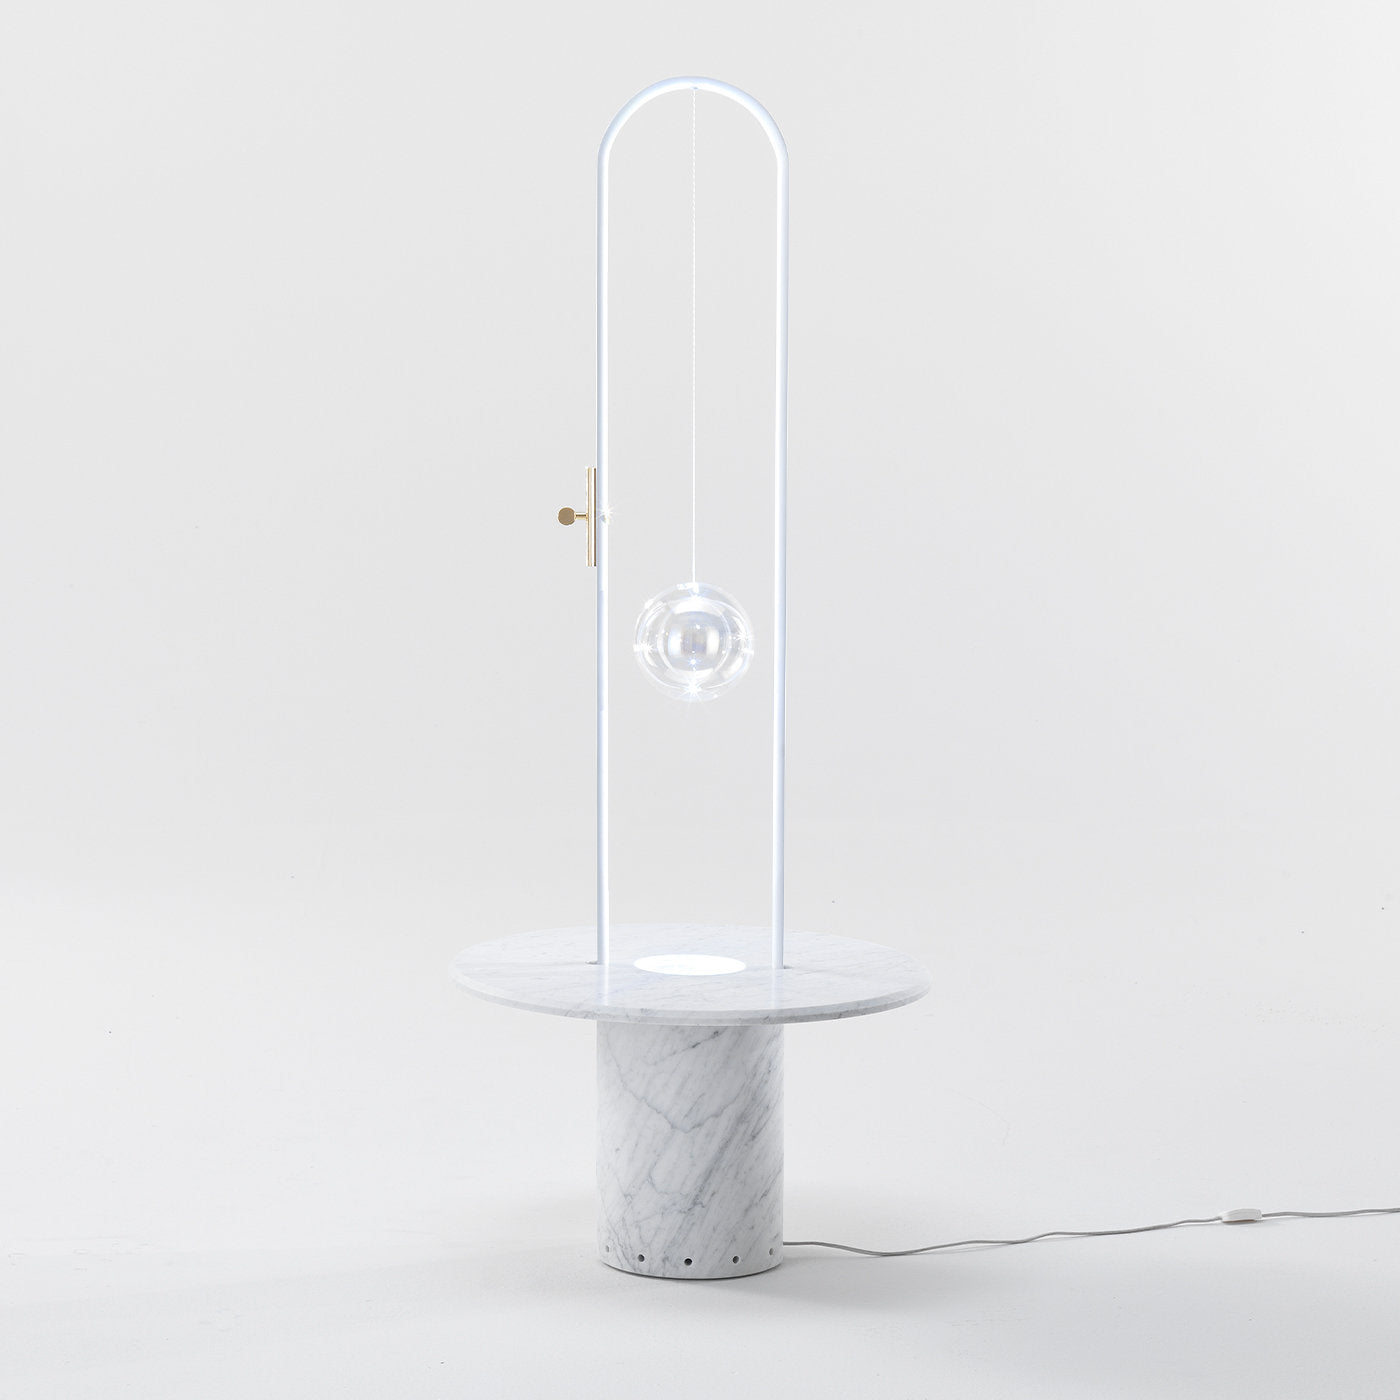 SURANDE FLOOR LAMP - Design by Alessandro Zambelli - Alternative view 1